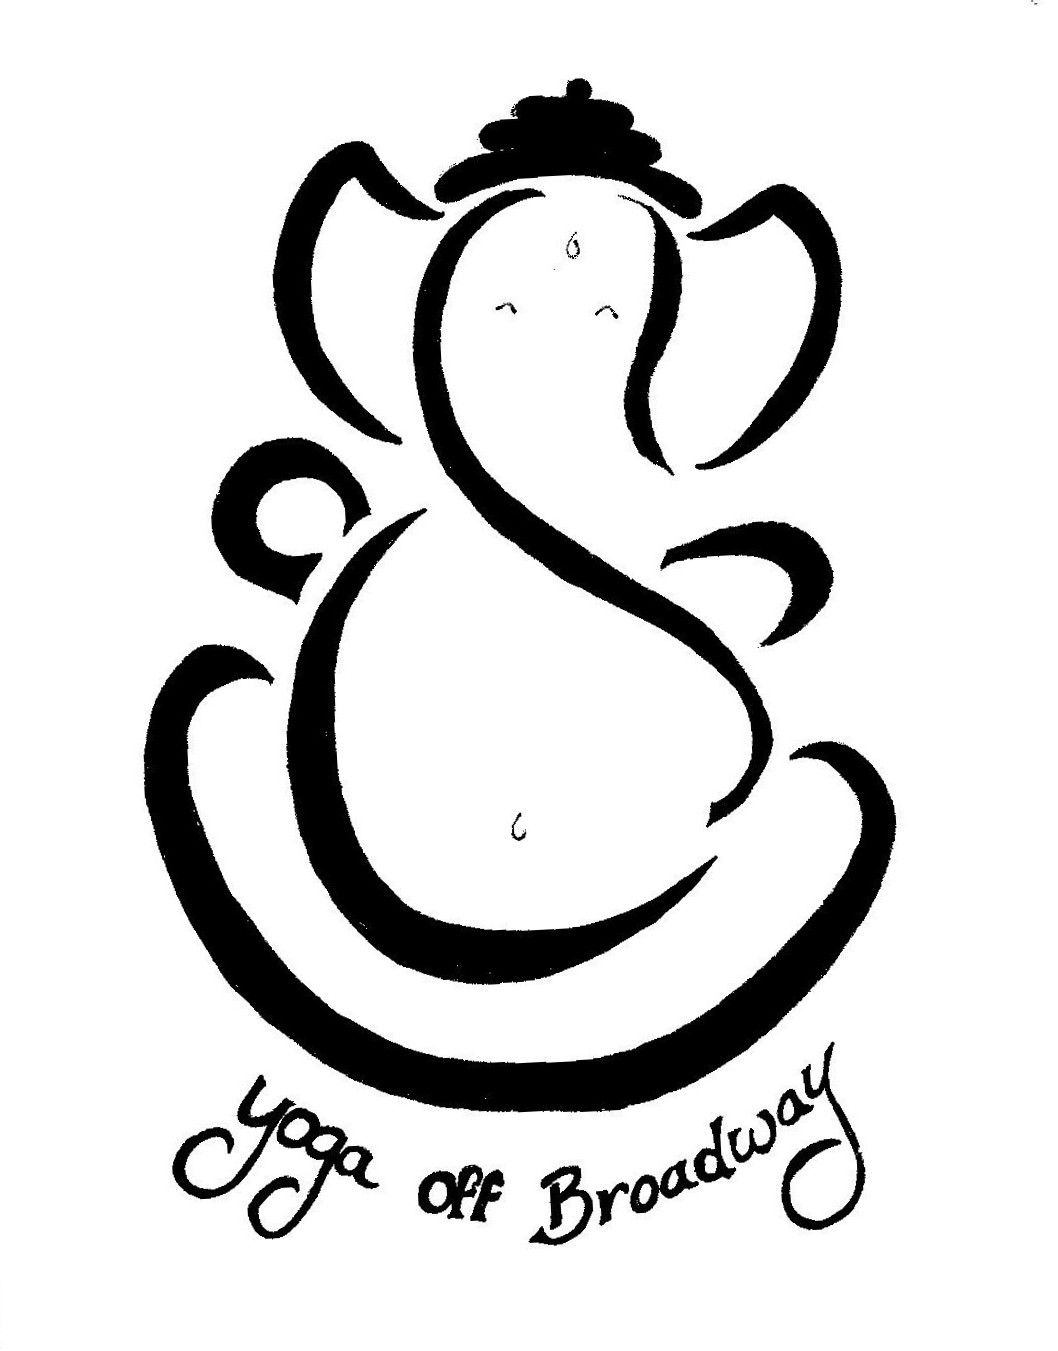 Free Ganesha Drawing, Download Free Ganesha Drawing png images, Free